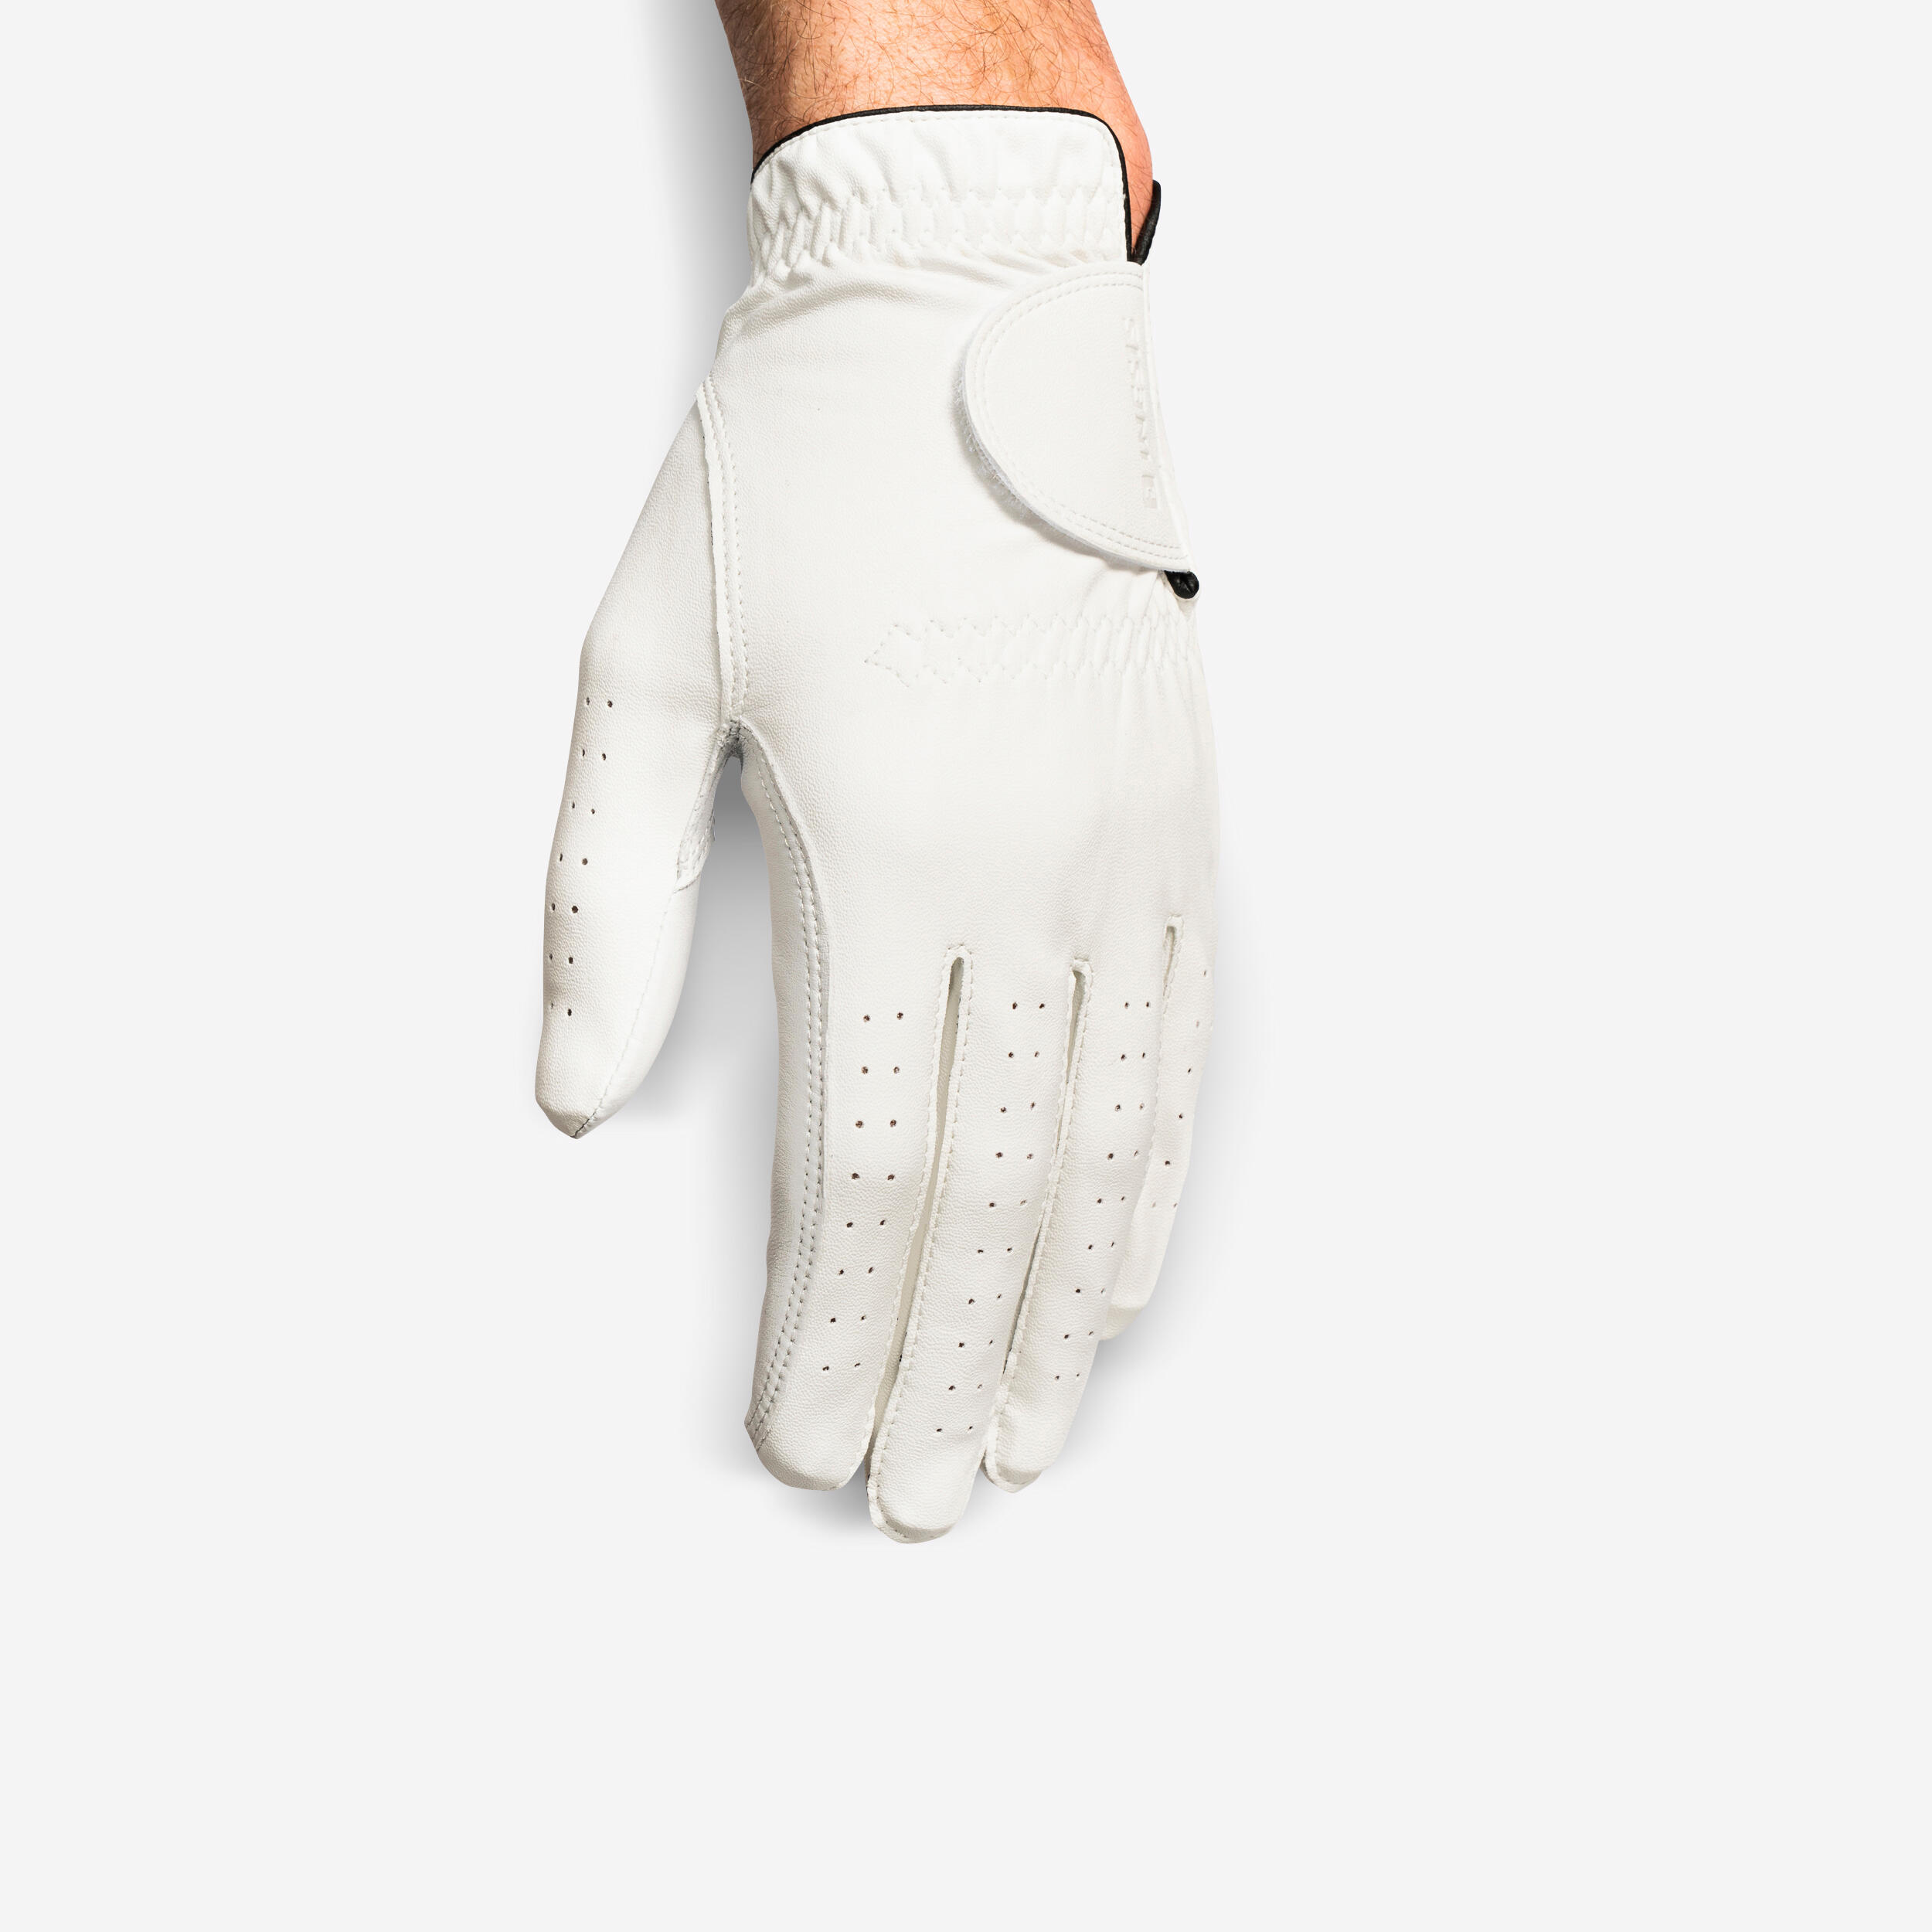 gant golf droitier homme - 500 blanc - inesis